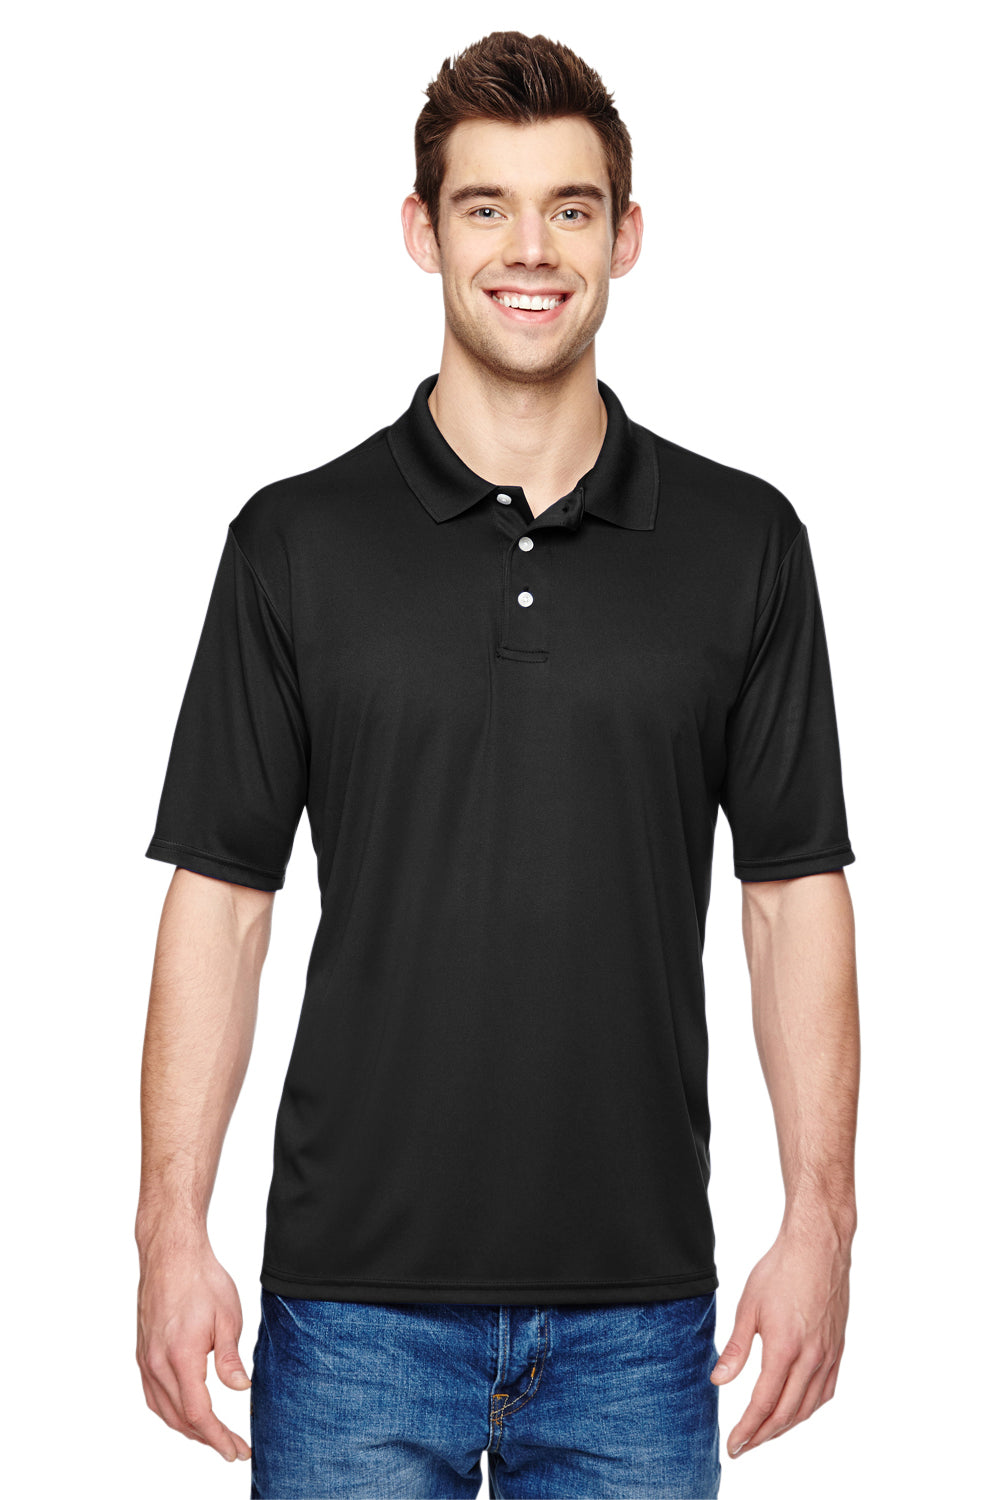 Hanes 4800 Mens Cool Dri Fresh IQ Moisture Wicking Short Sleeve Polo Shirt Black Front